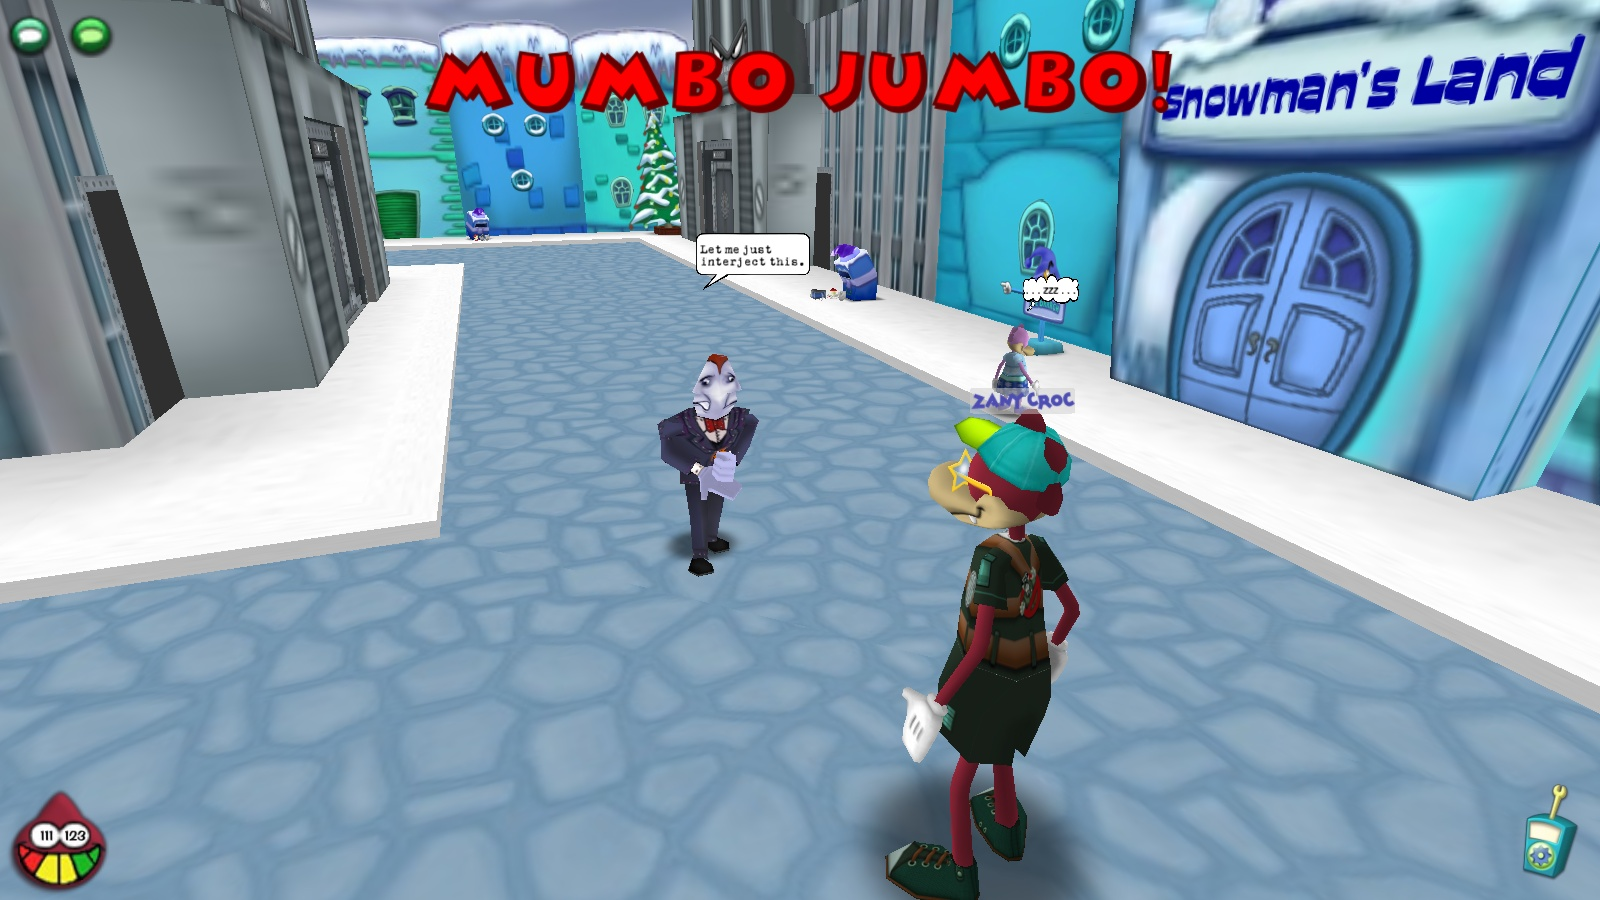 A Double Talker performing Mumbo Jumbo.